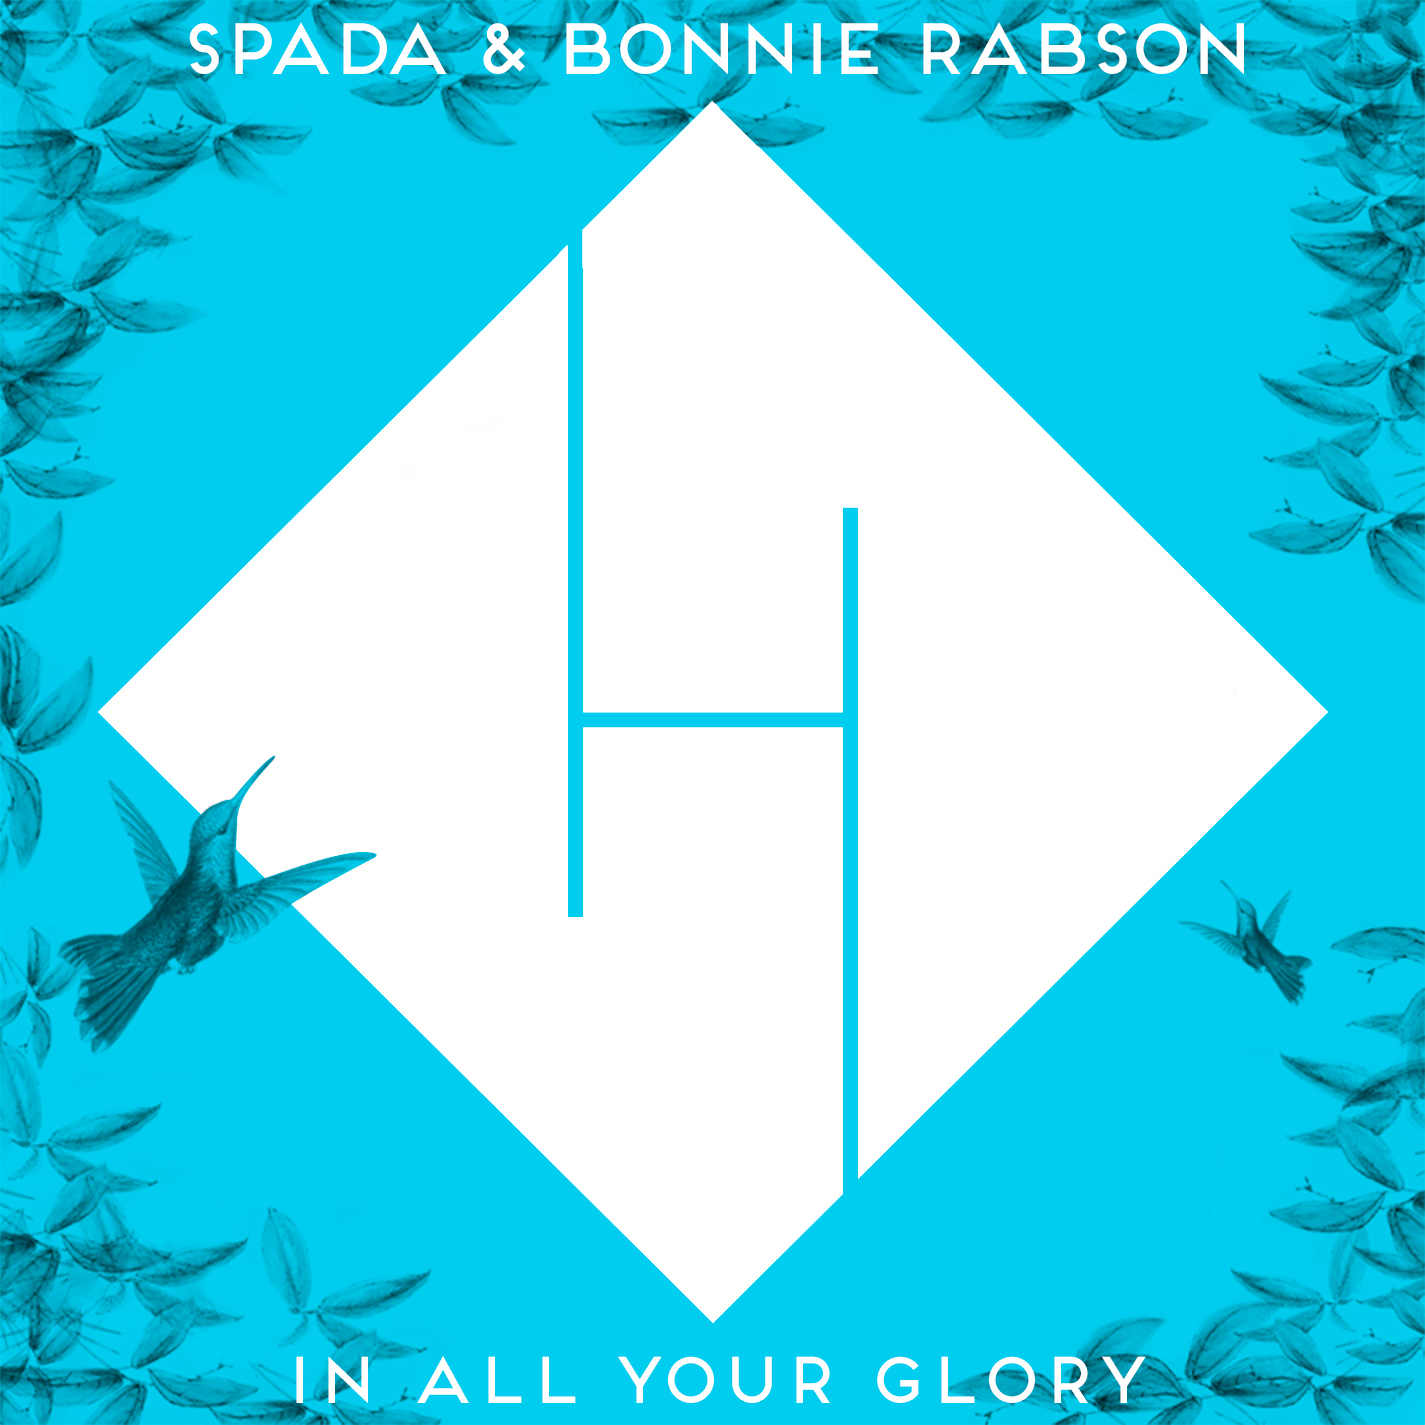 Descarregar In All Your Glory - Spada & Bonnie Rabson (Remix Boris Brejcha) PREVIEW